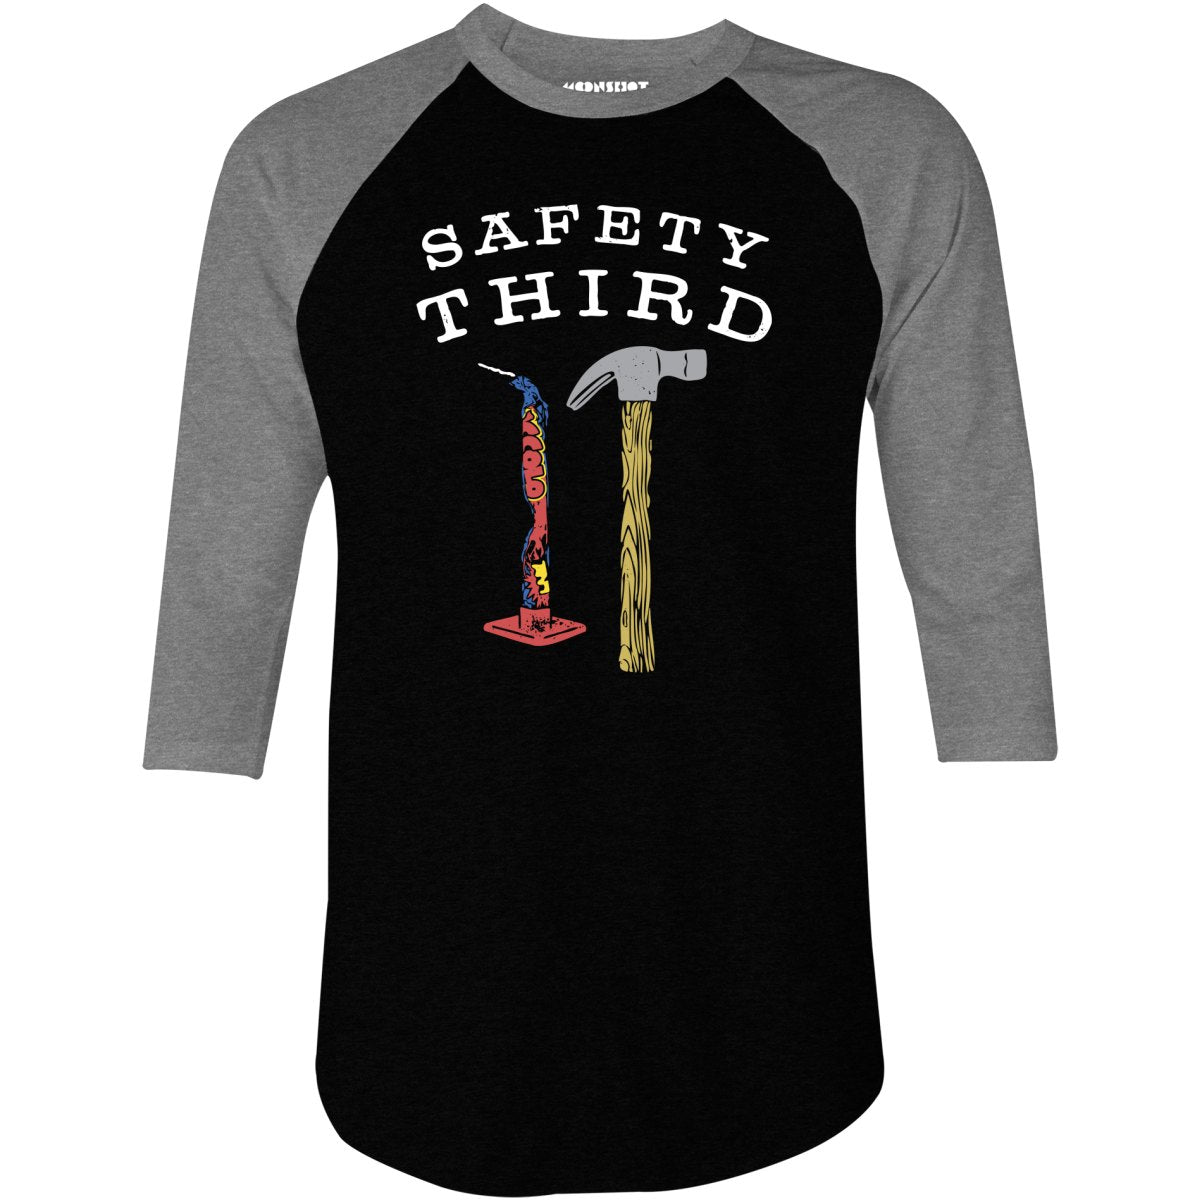 Safety Third v3 - 3/4 Sleeve Raglan T-Shirt